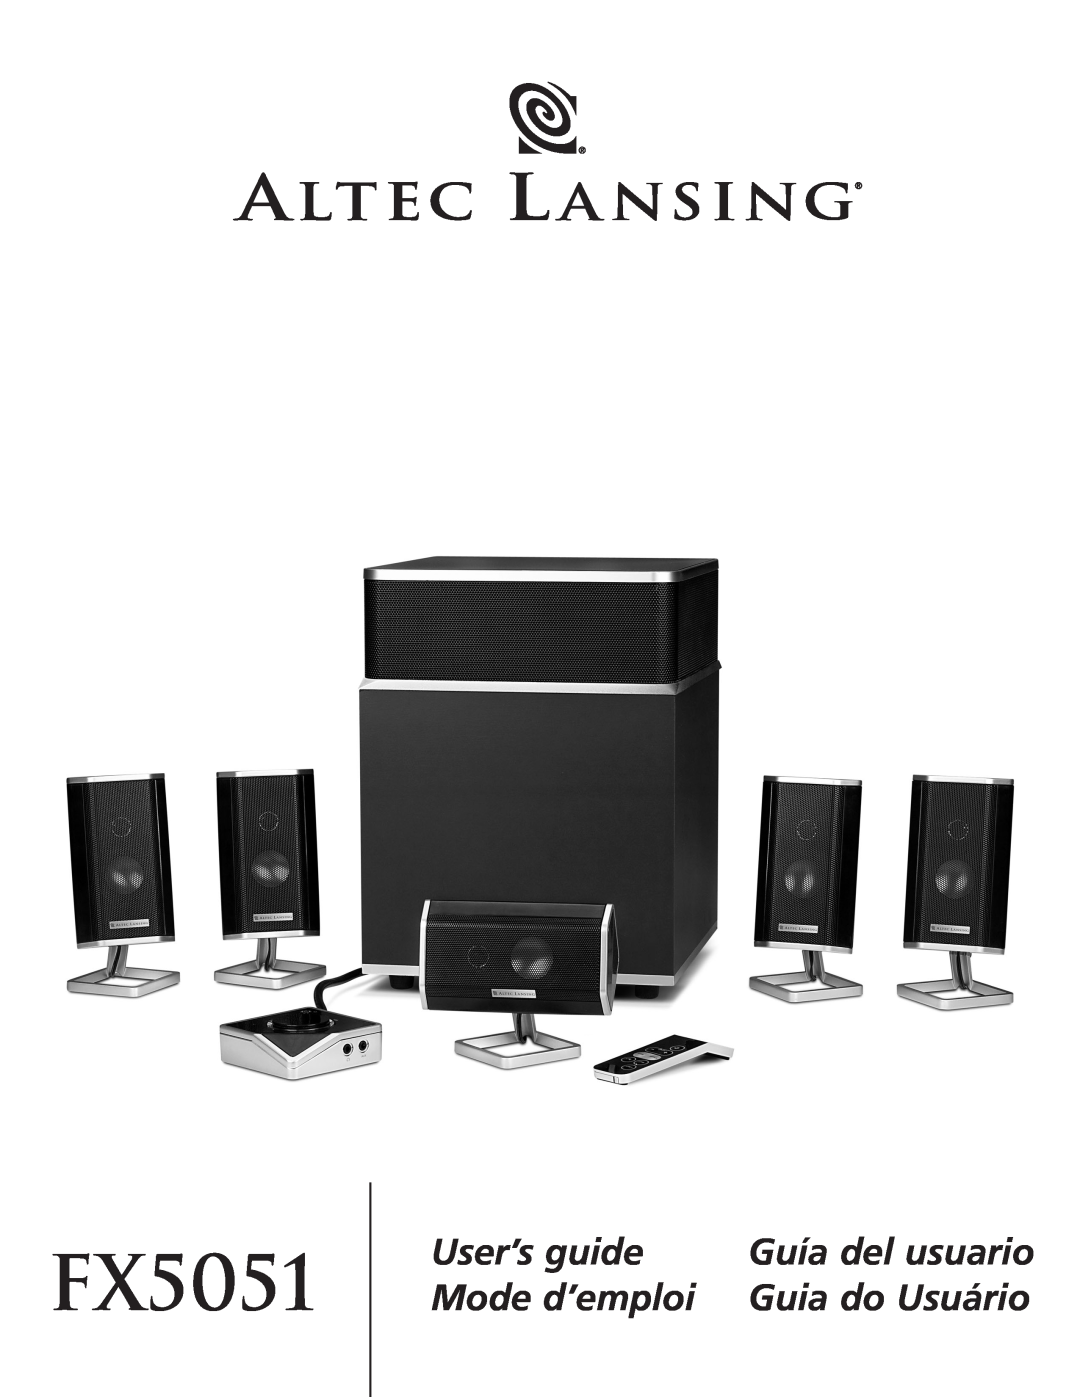 Altec Lansing FX5051 manual User’s guide, Mode d’emploi, Guía del usuario, Guia do Usuário 